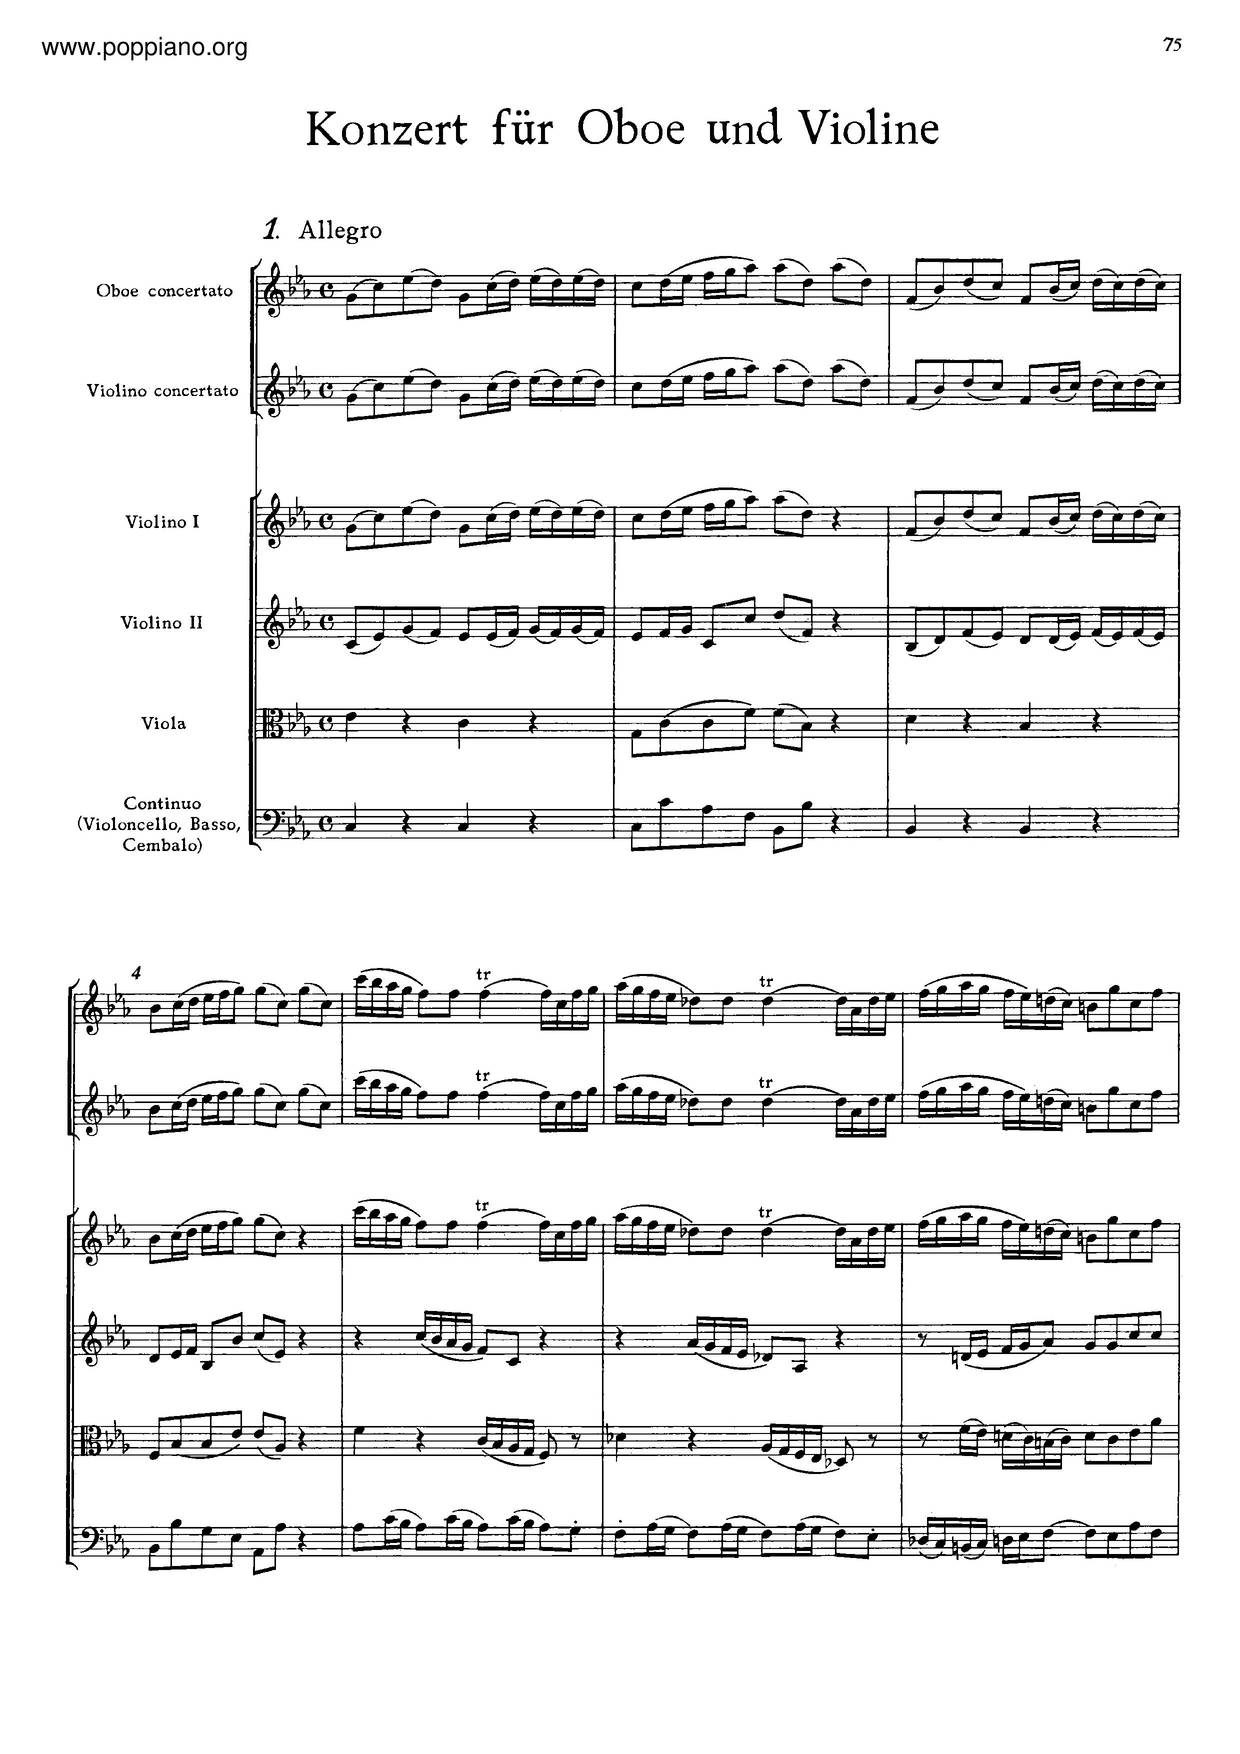 Concerto For Violin And Oboe In C Minor, BWV 1060Rピアノ譜